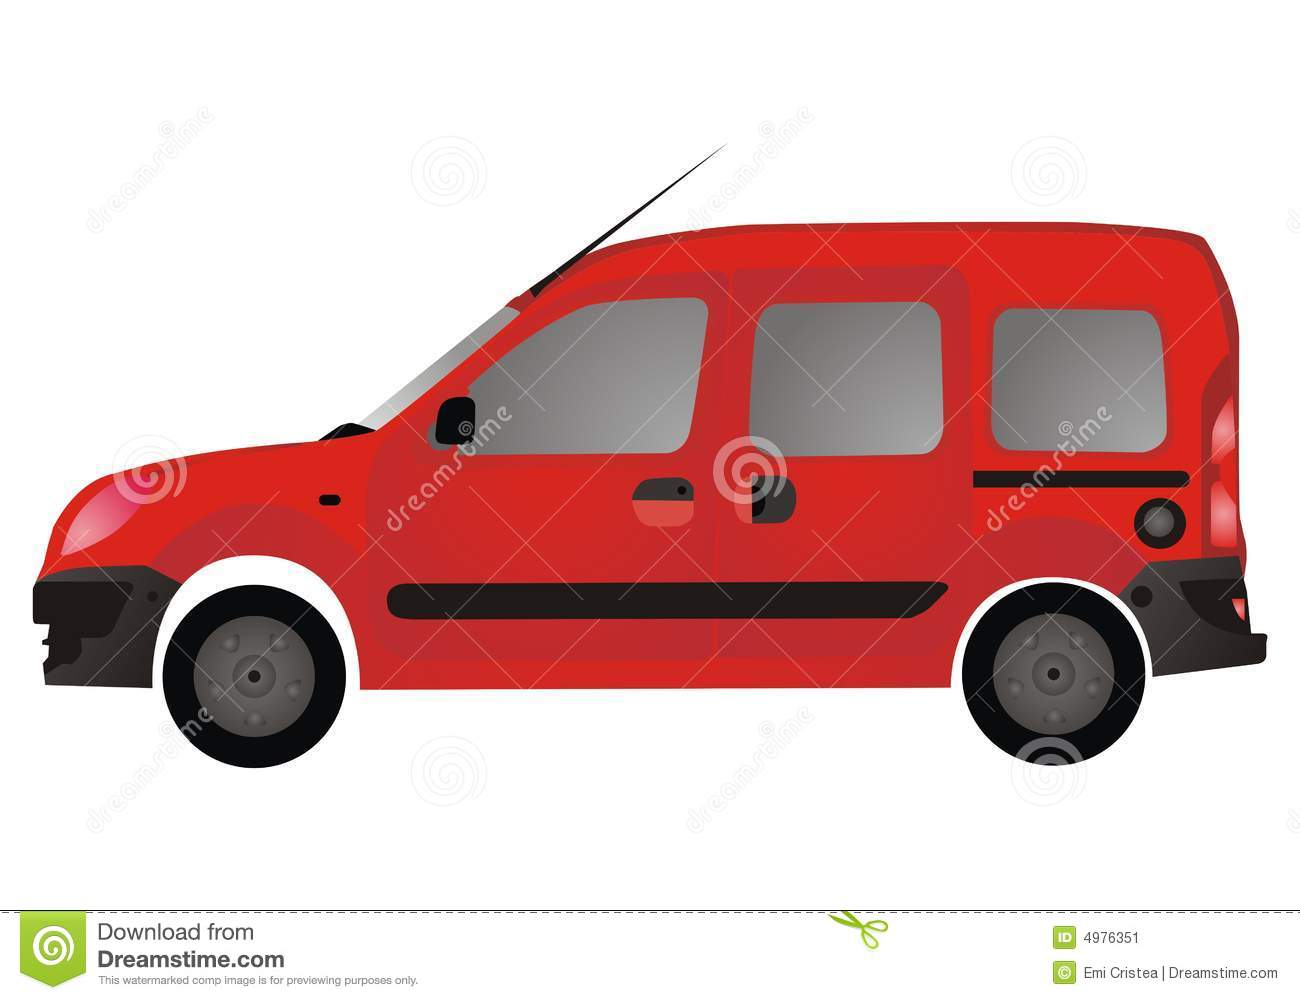 Red Van Autovehicle  Car  Stock Image   Image  4976351